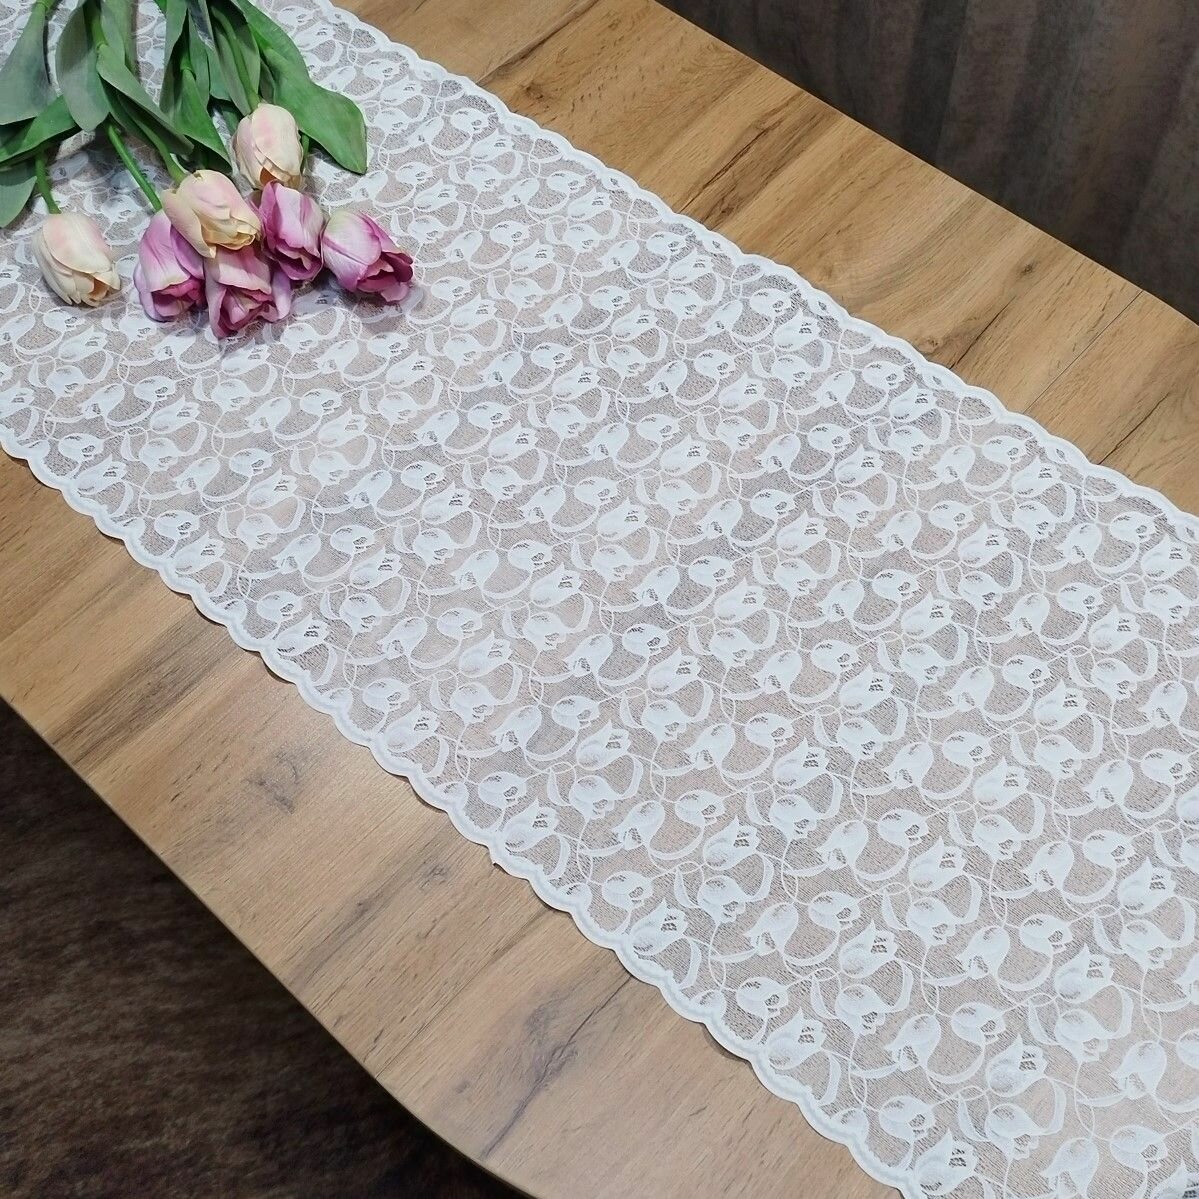 Салфетка-дорожка для стола "Ажур", ширина 50 см. Белая